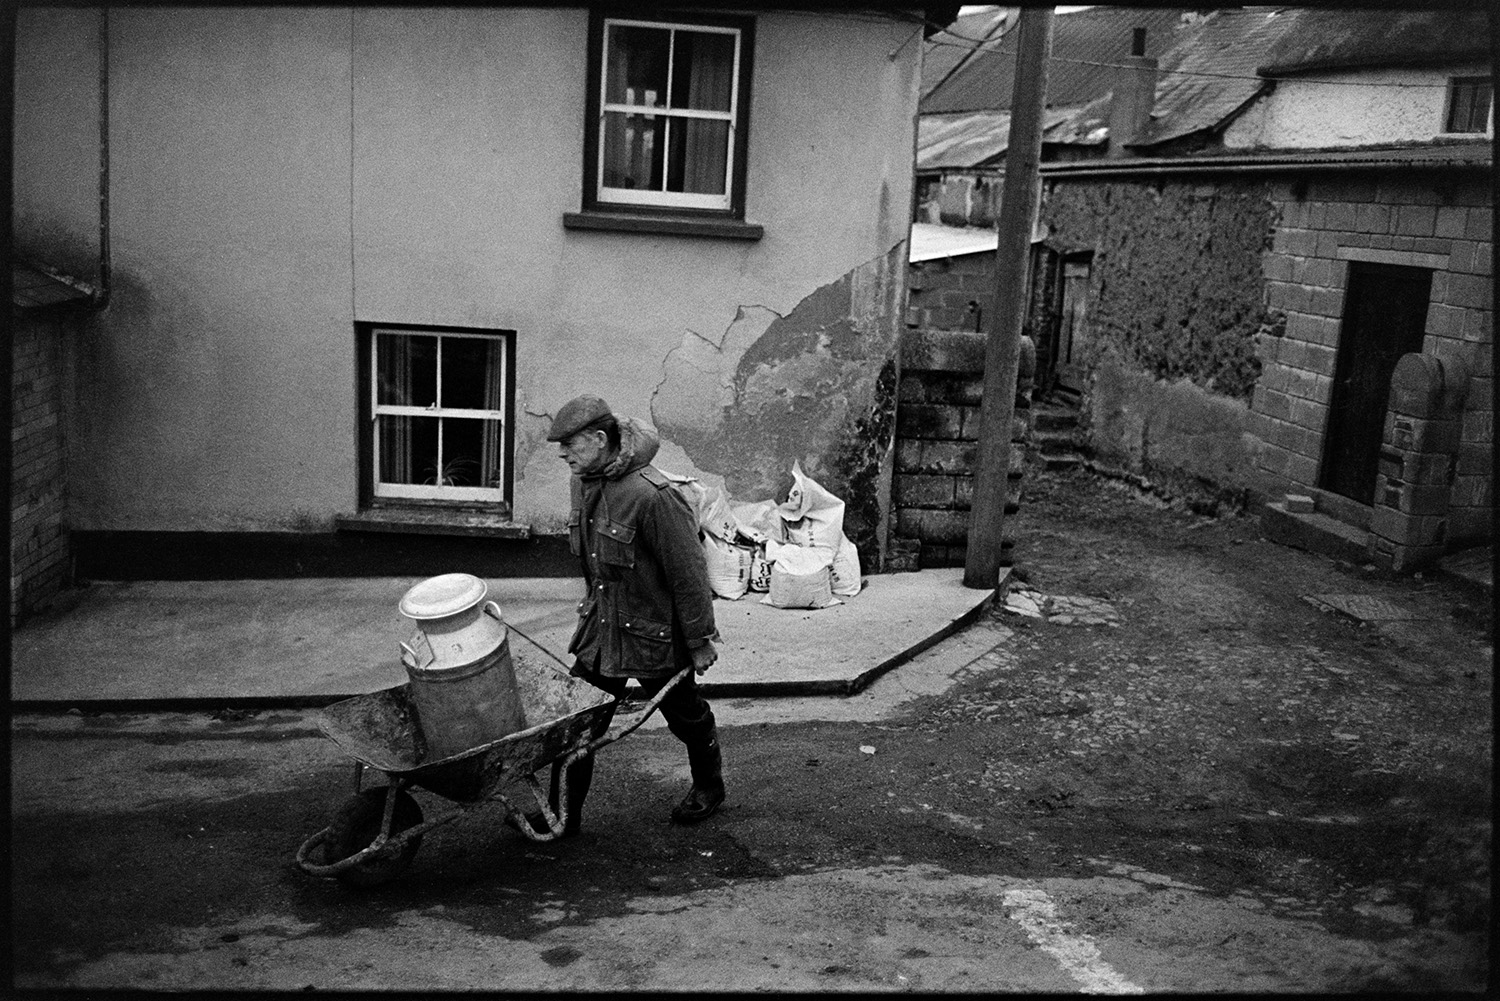 Farmer taking milk churn to stand in middle of village. 
[Jim Woolacott transporting a milk churn in a wheelbarrow from the farmyard at Verdun, Atherington to a milk churn stand in the village.]